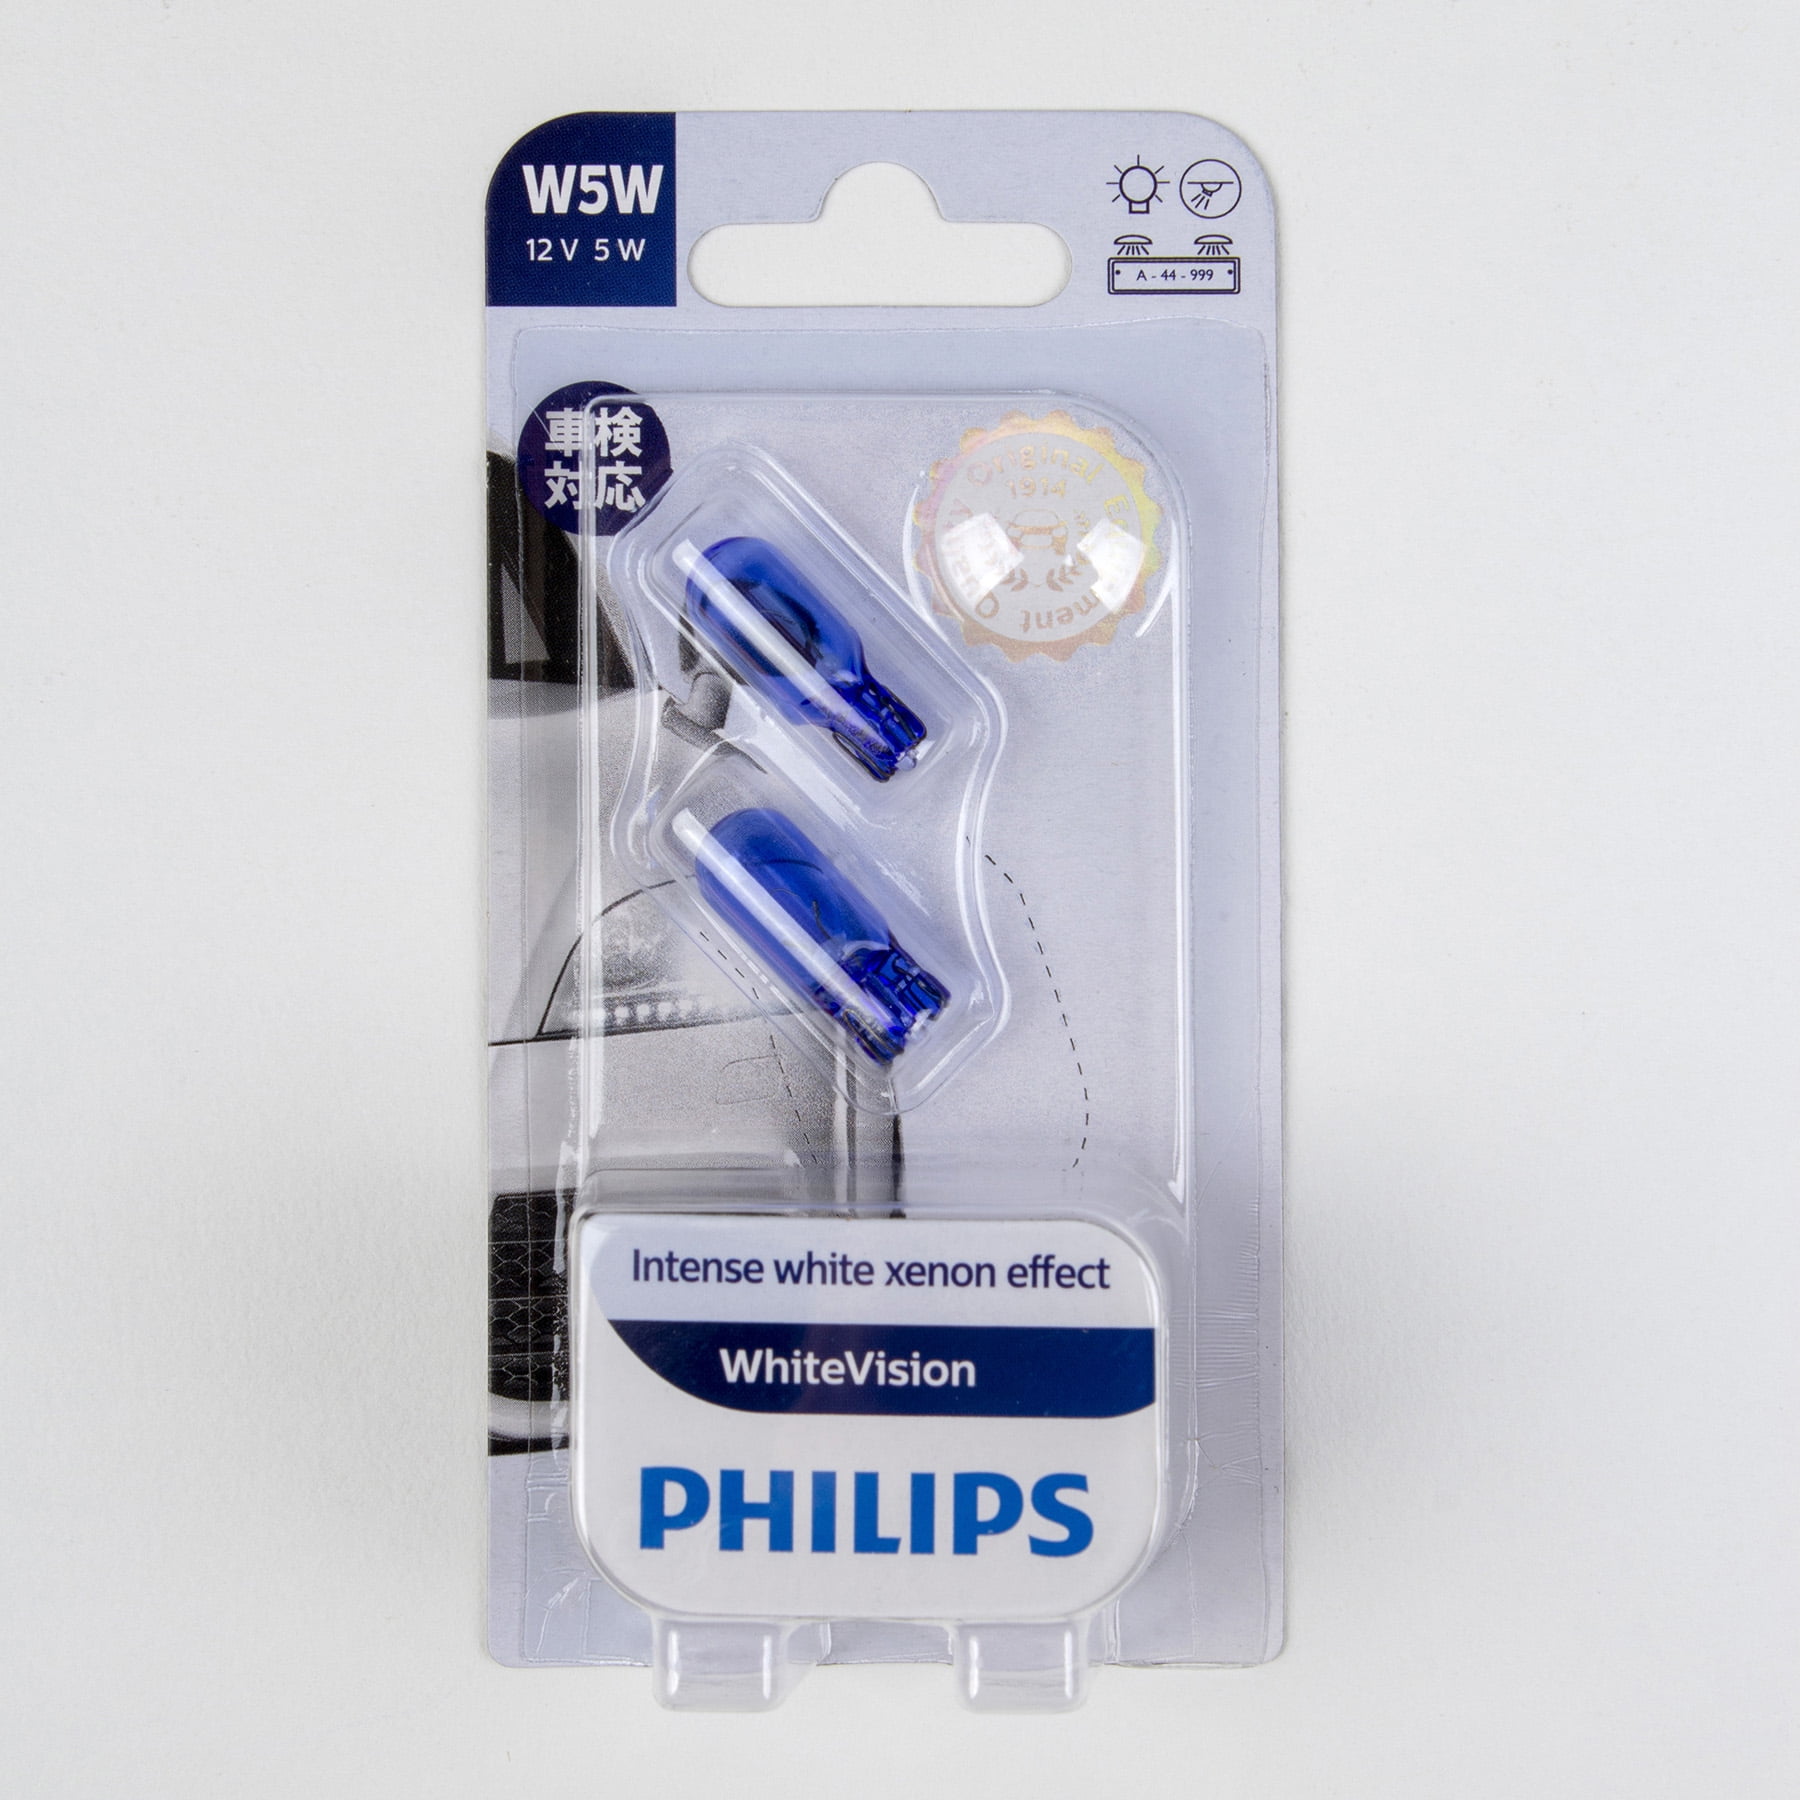 Philips WhiteVision Intense white xenon effect W5W 194 168 T10 12V